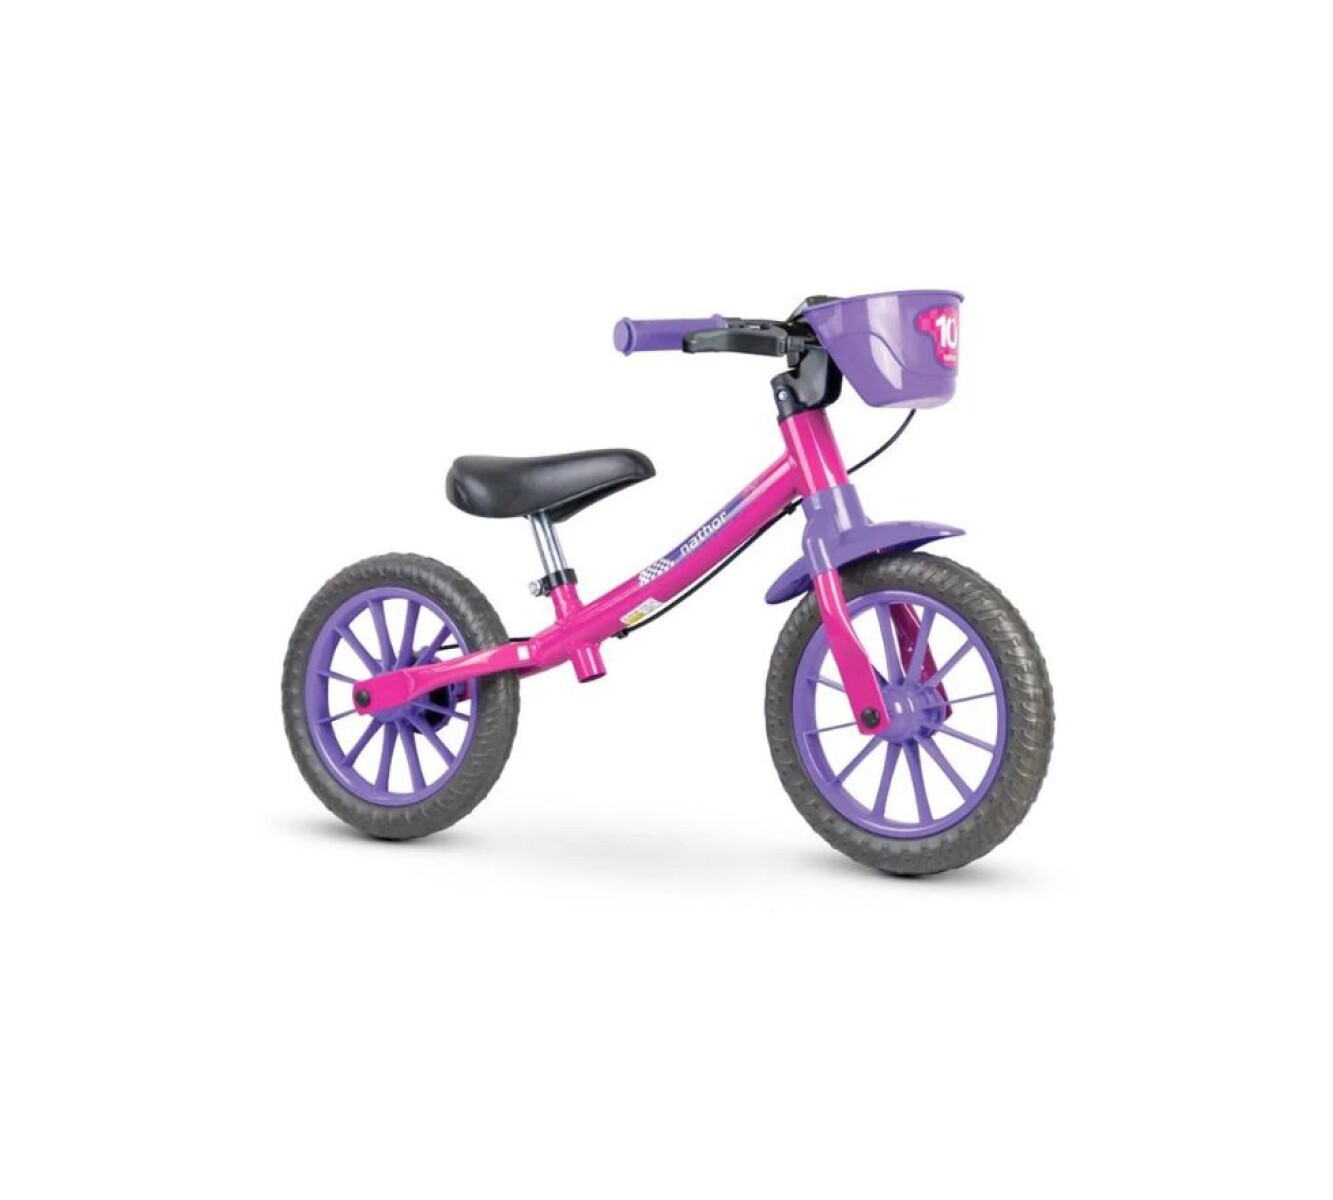 Bicicleta Infantil Baccio Balance Rodado 12 